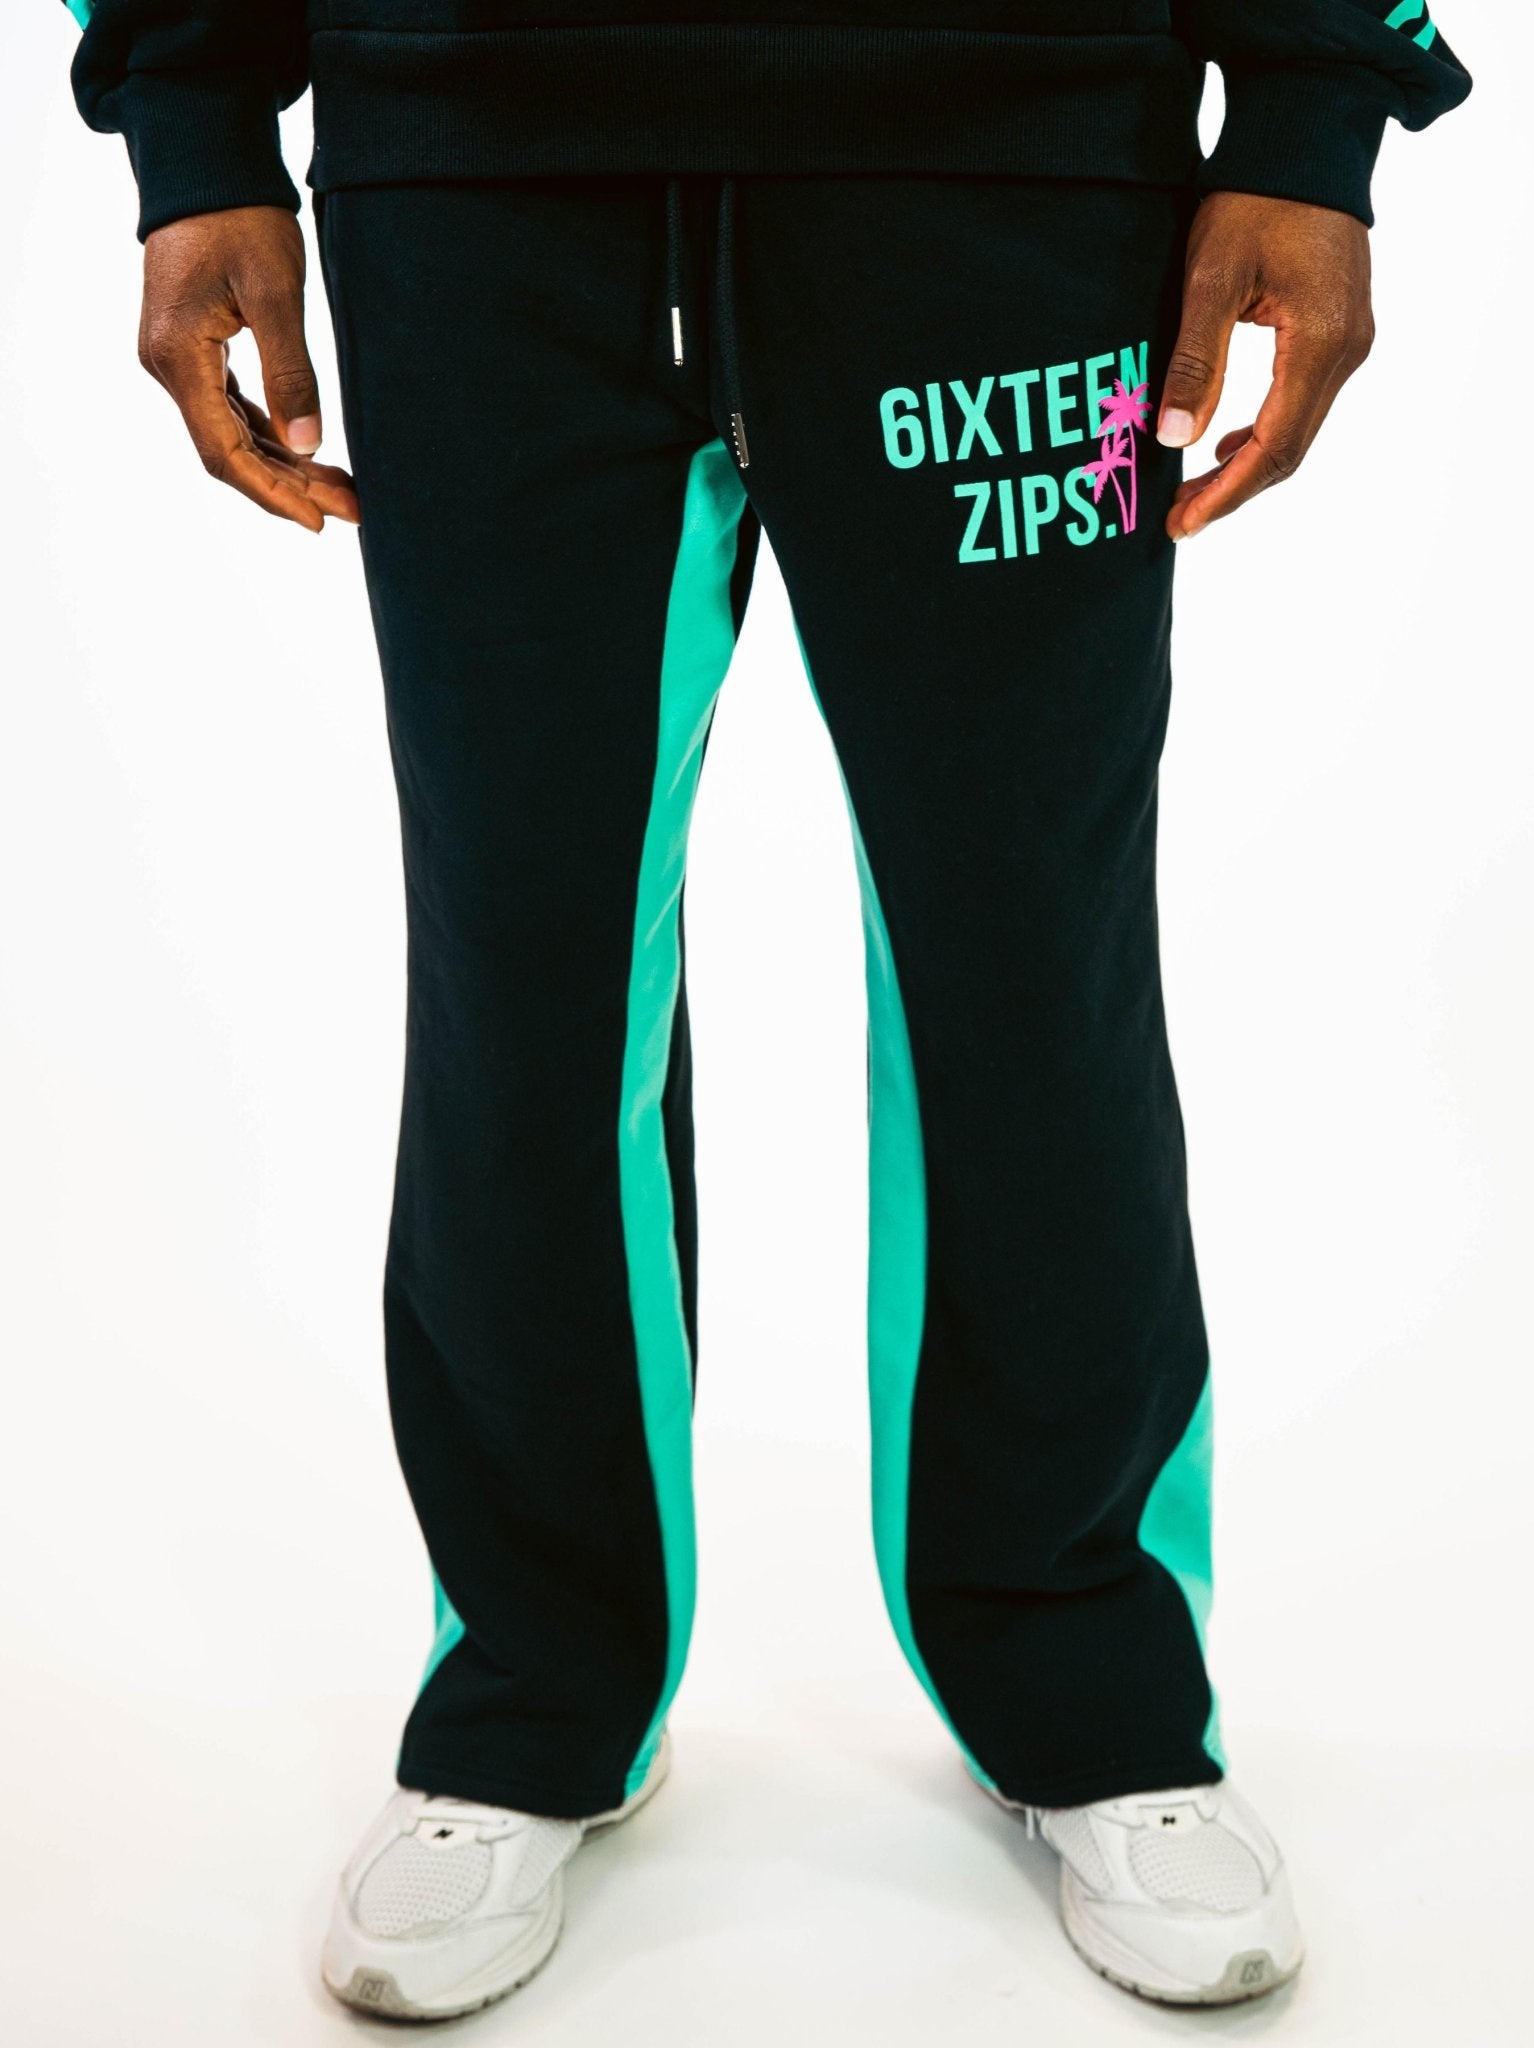 South Beach Black/Mint Luxury Heavyweight Flared Sweatpants – 6iXTEEN Zips